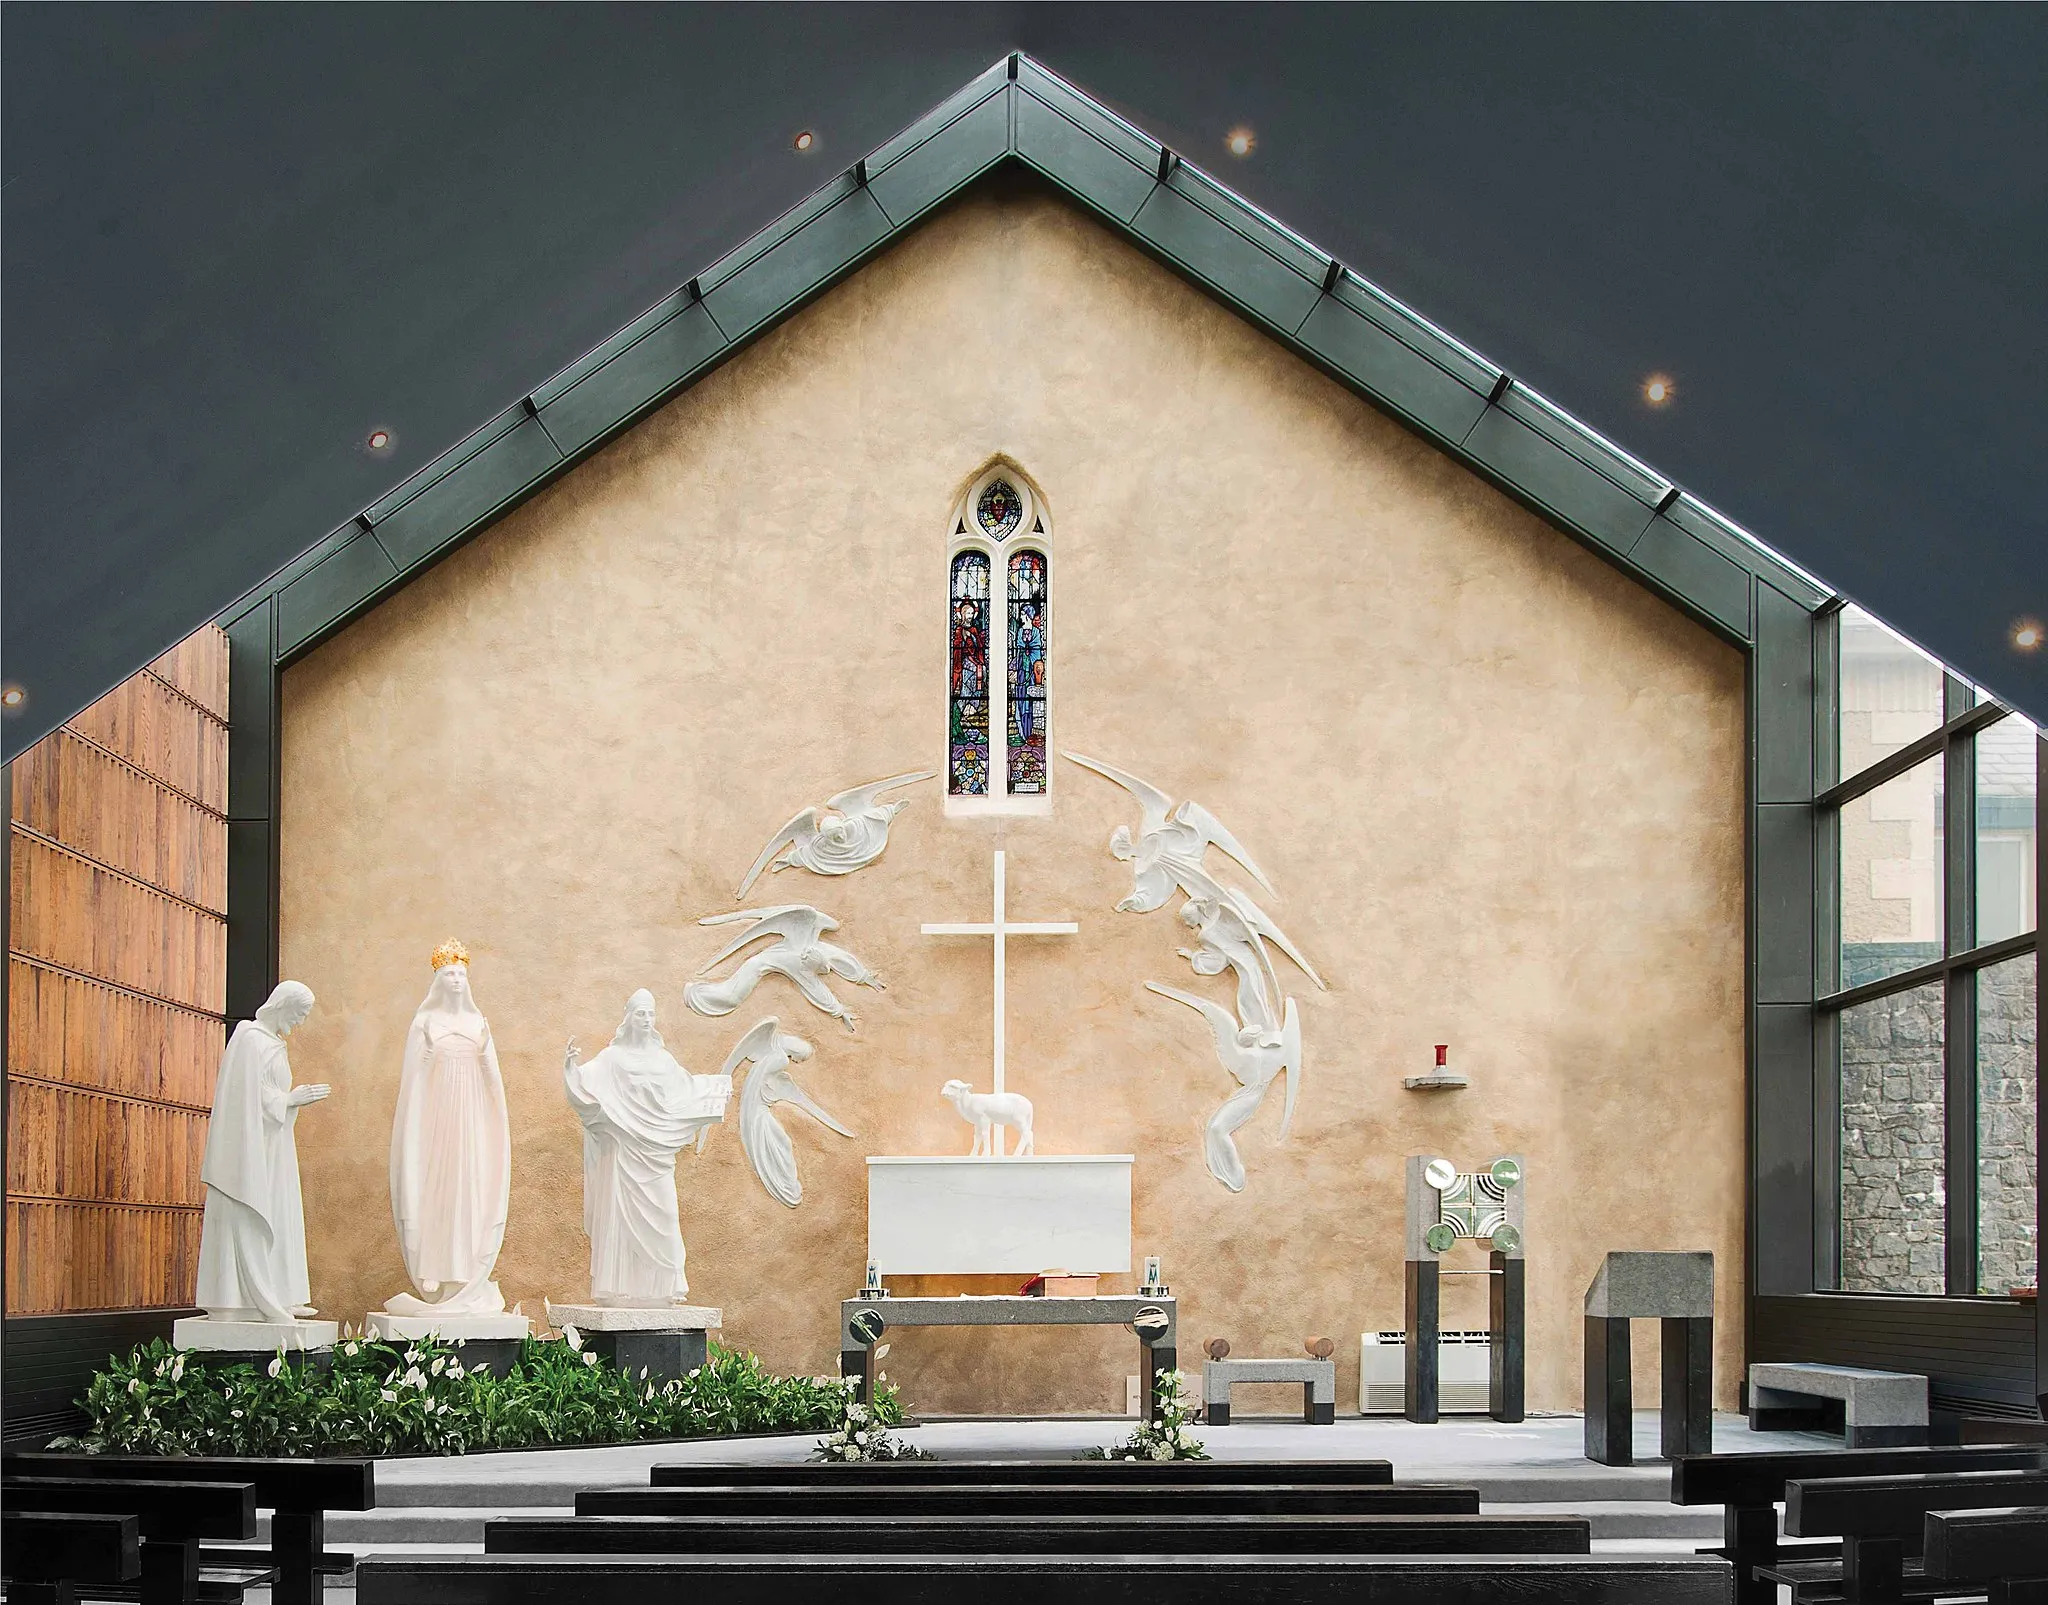 Photo showing: The Apparition Chapel at Knock Shrine, Co Mayo, Ireland